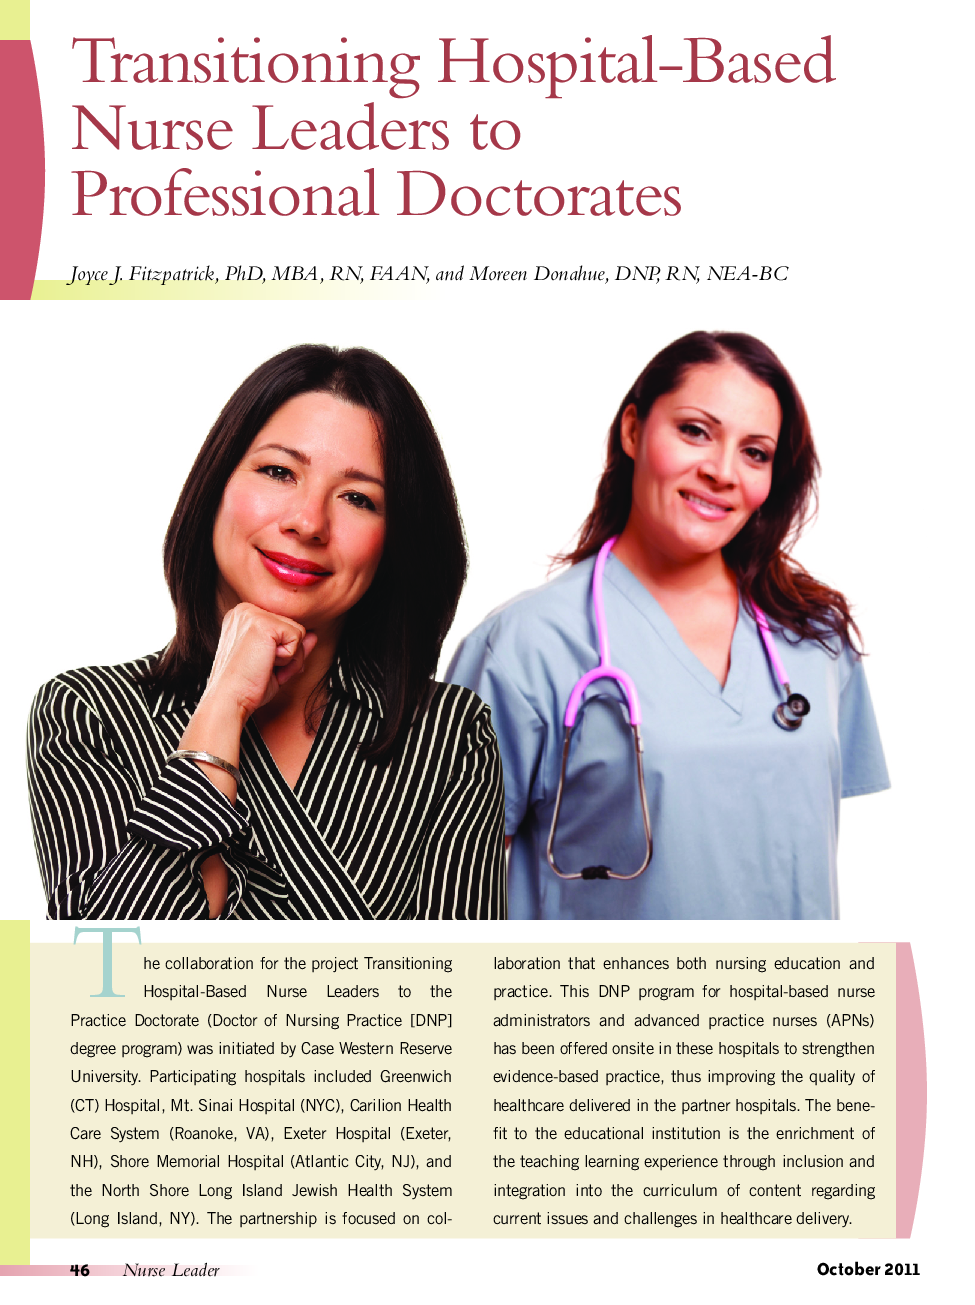 Transitioning Hospital-Based Nurse Leaders to Professional Doctorates